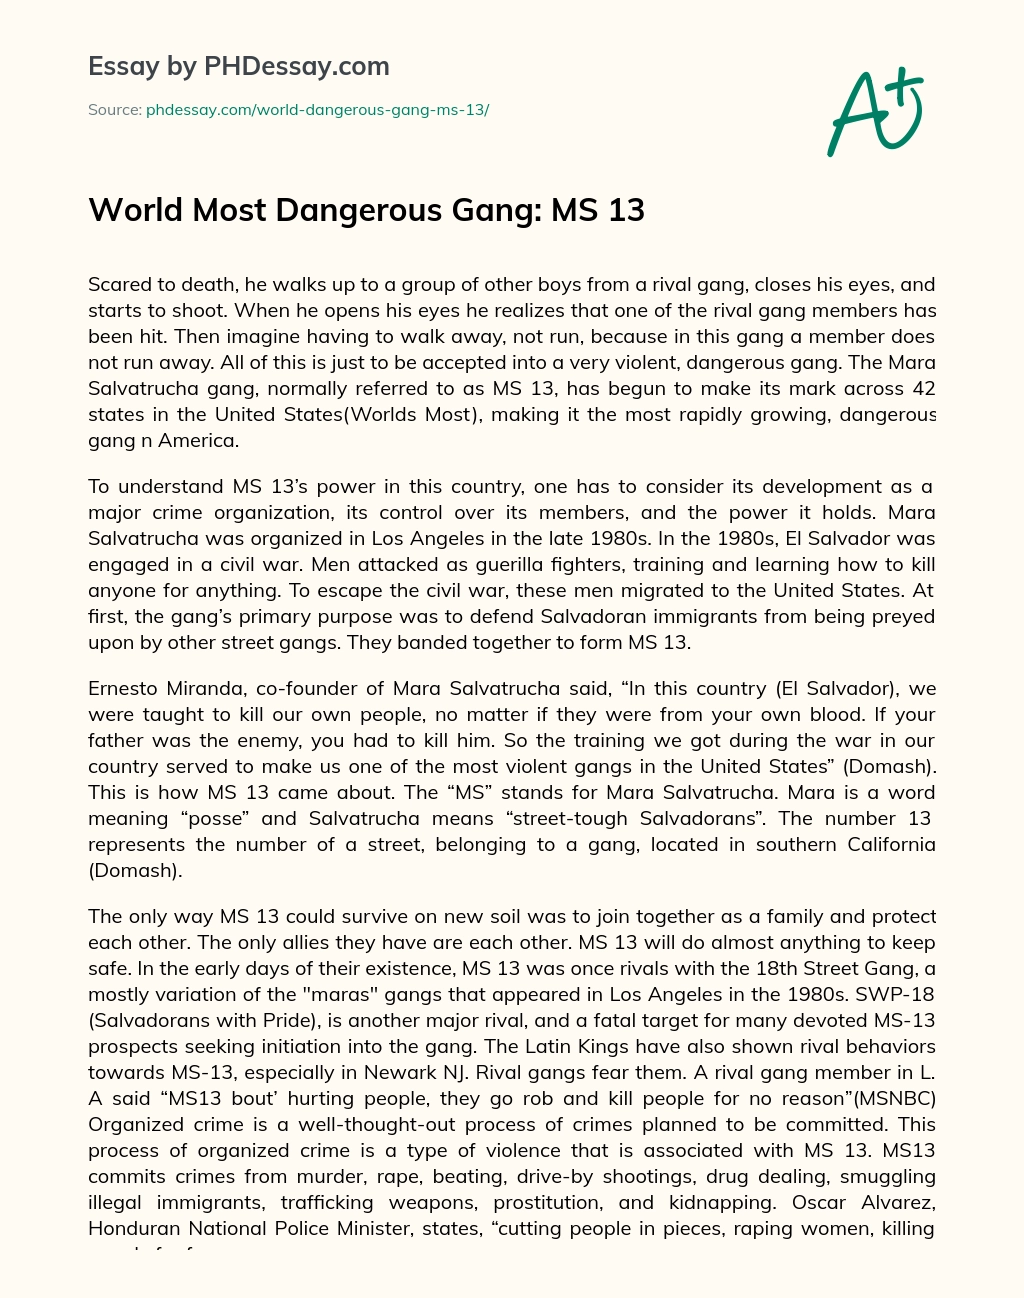 World Most Dangerous Gang: MS 13 essay